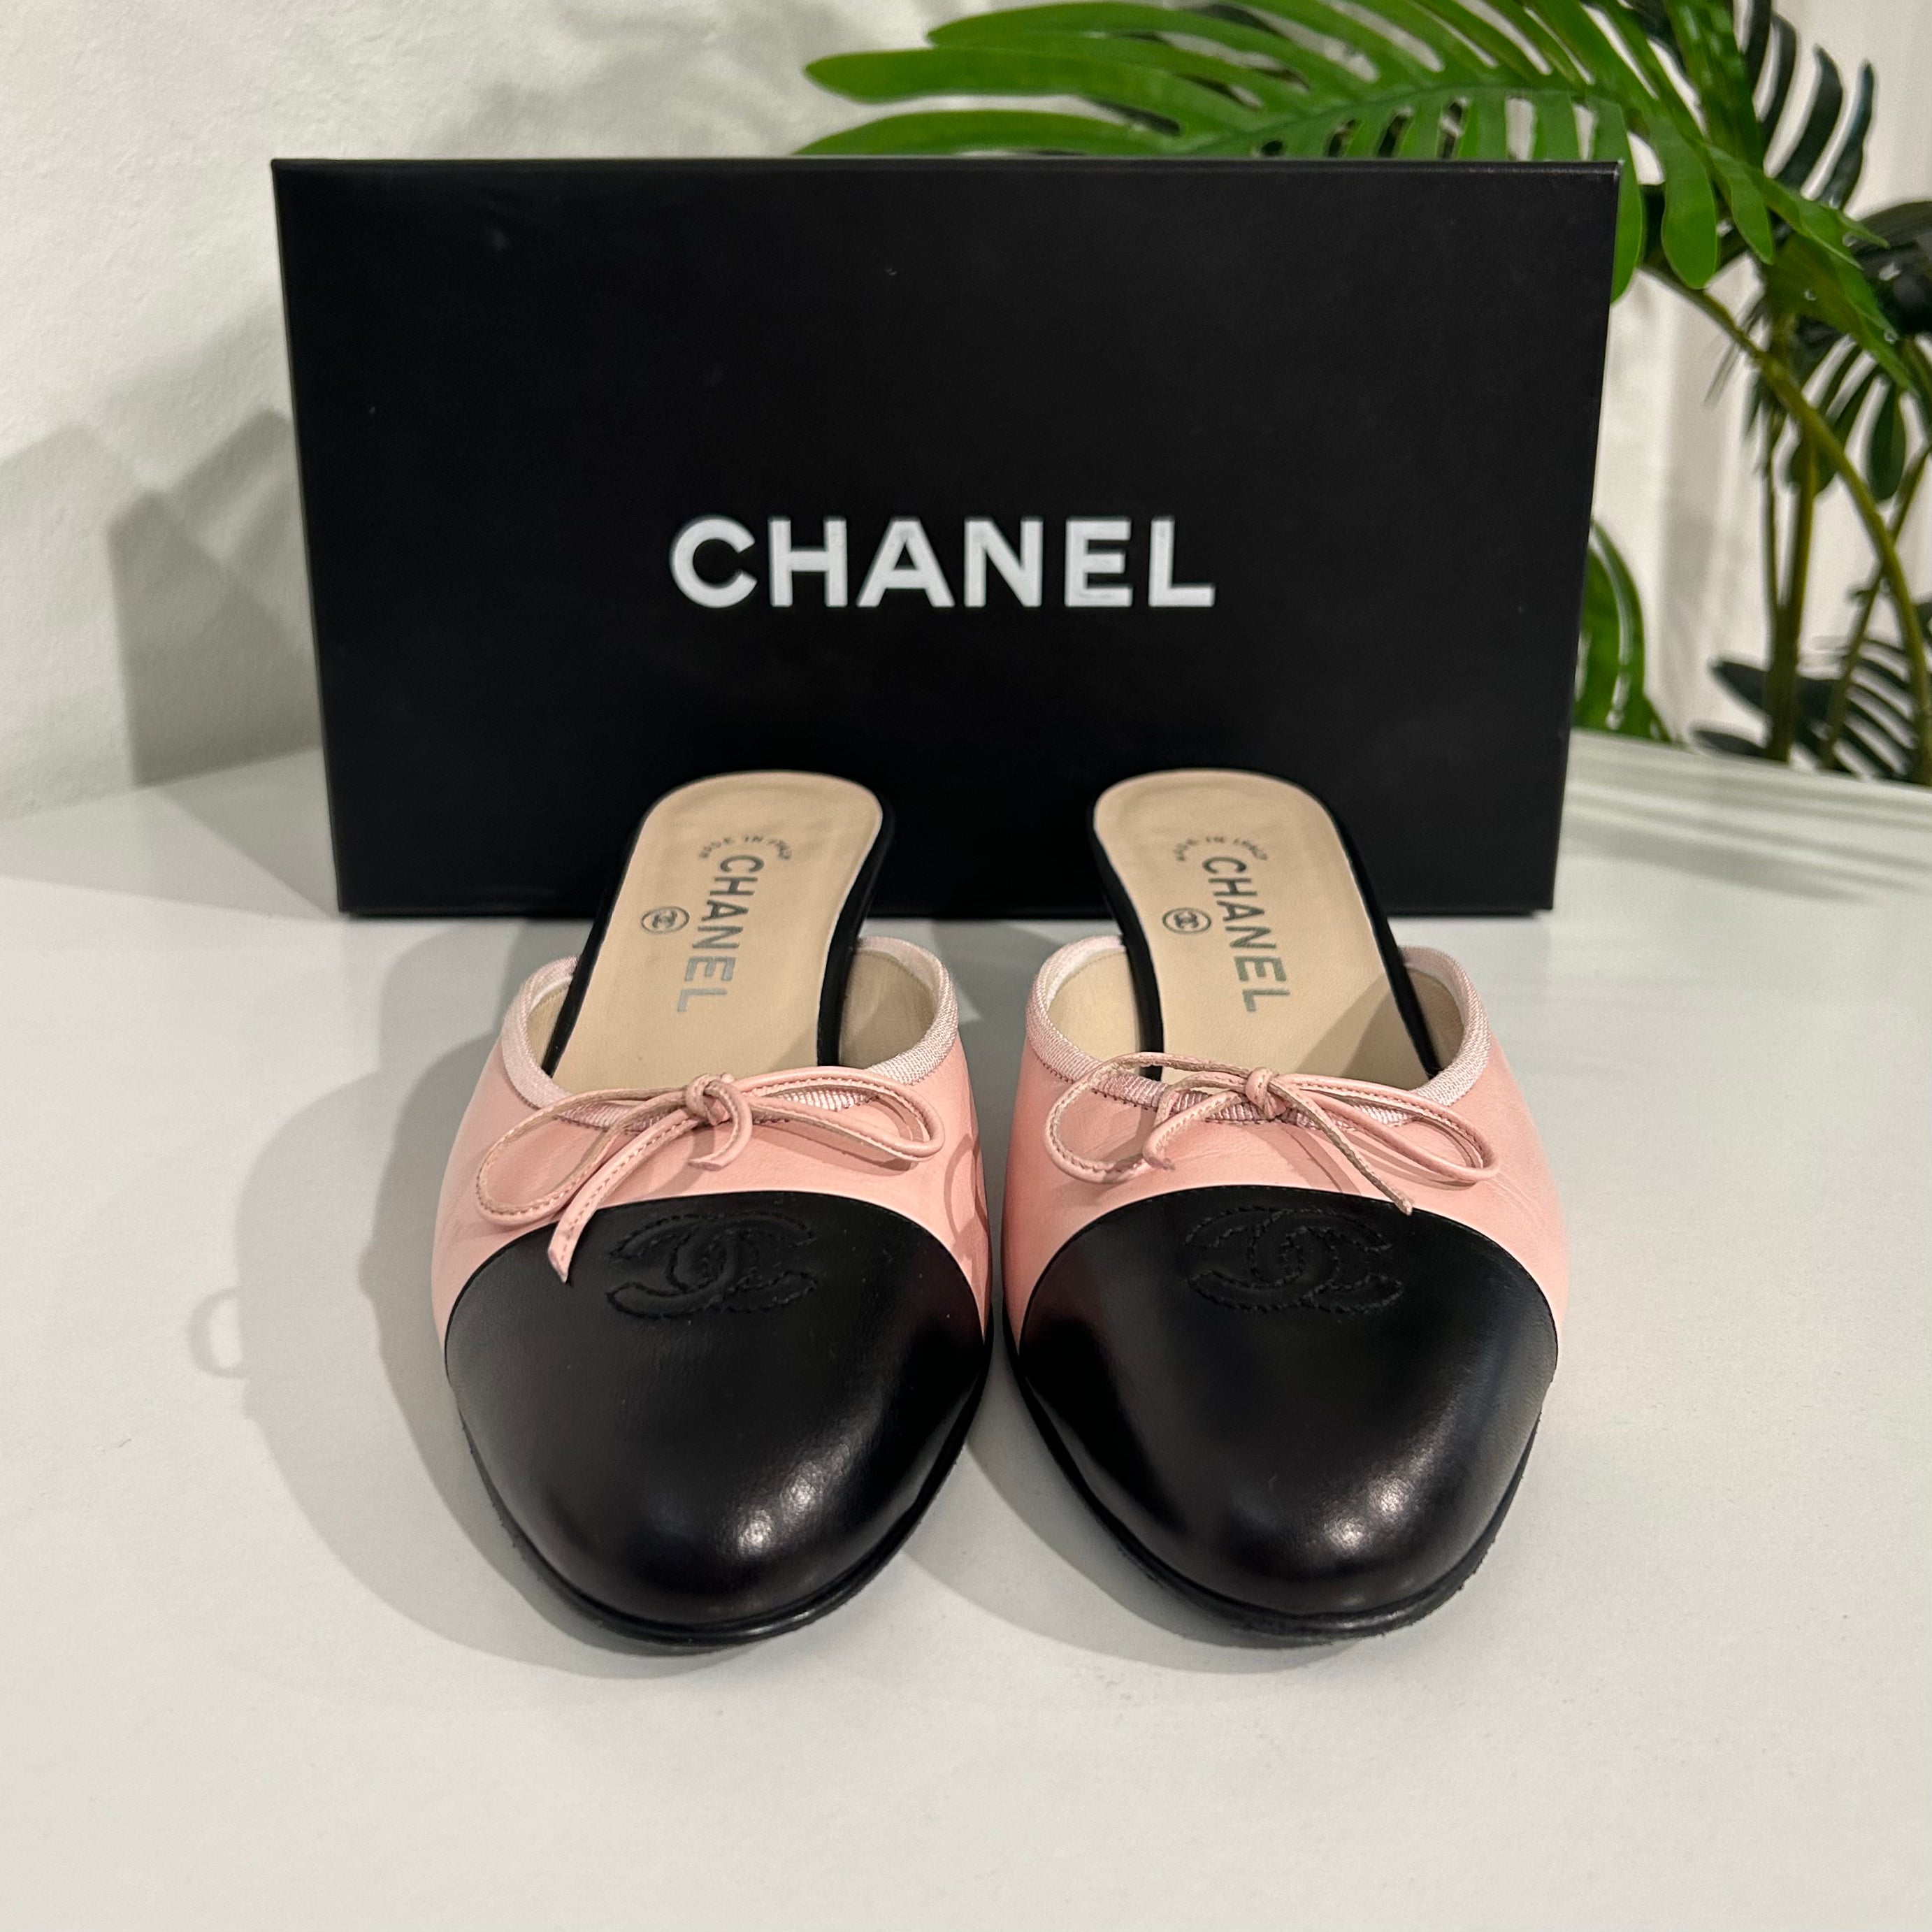 Chanel Pink & Black Mules